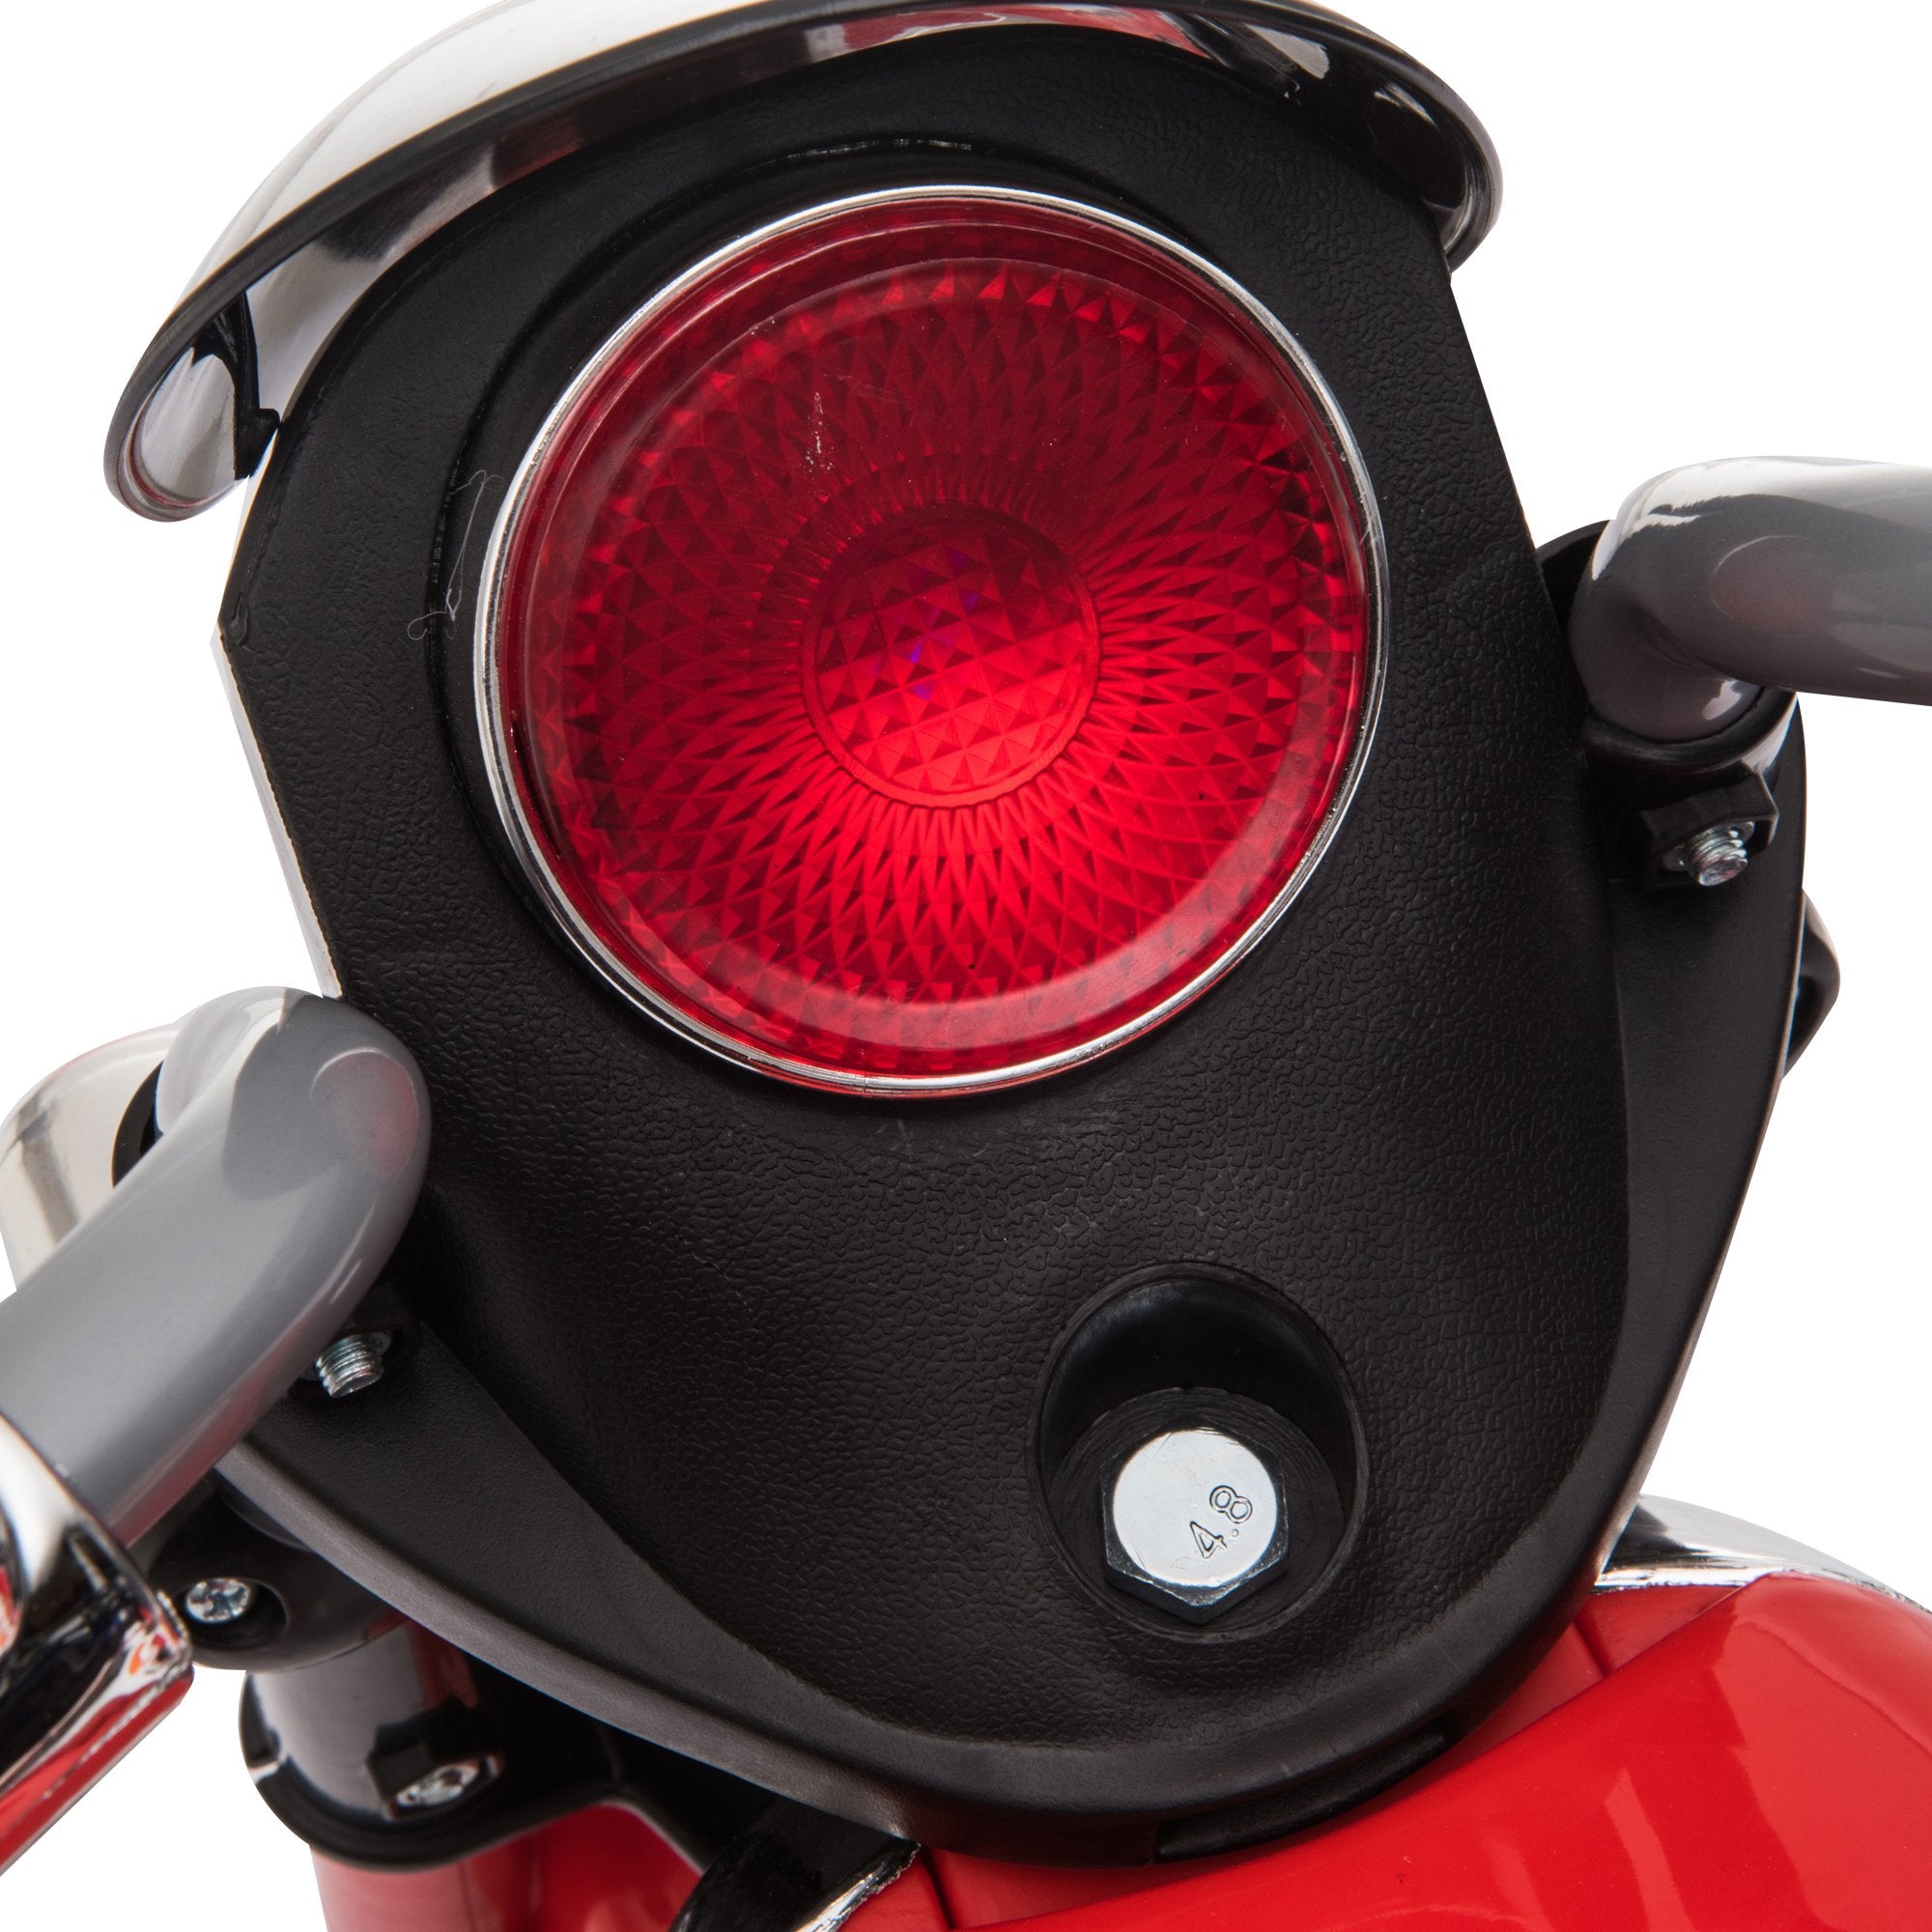 HOMCOM 6V Battery PP Kids Motorcycle Ride On Trike w/ Lights Music Horn 18 - 36 Months Red - Inspirely